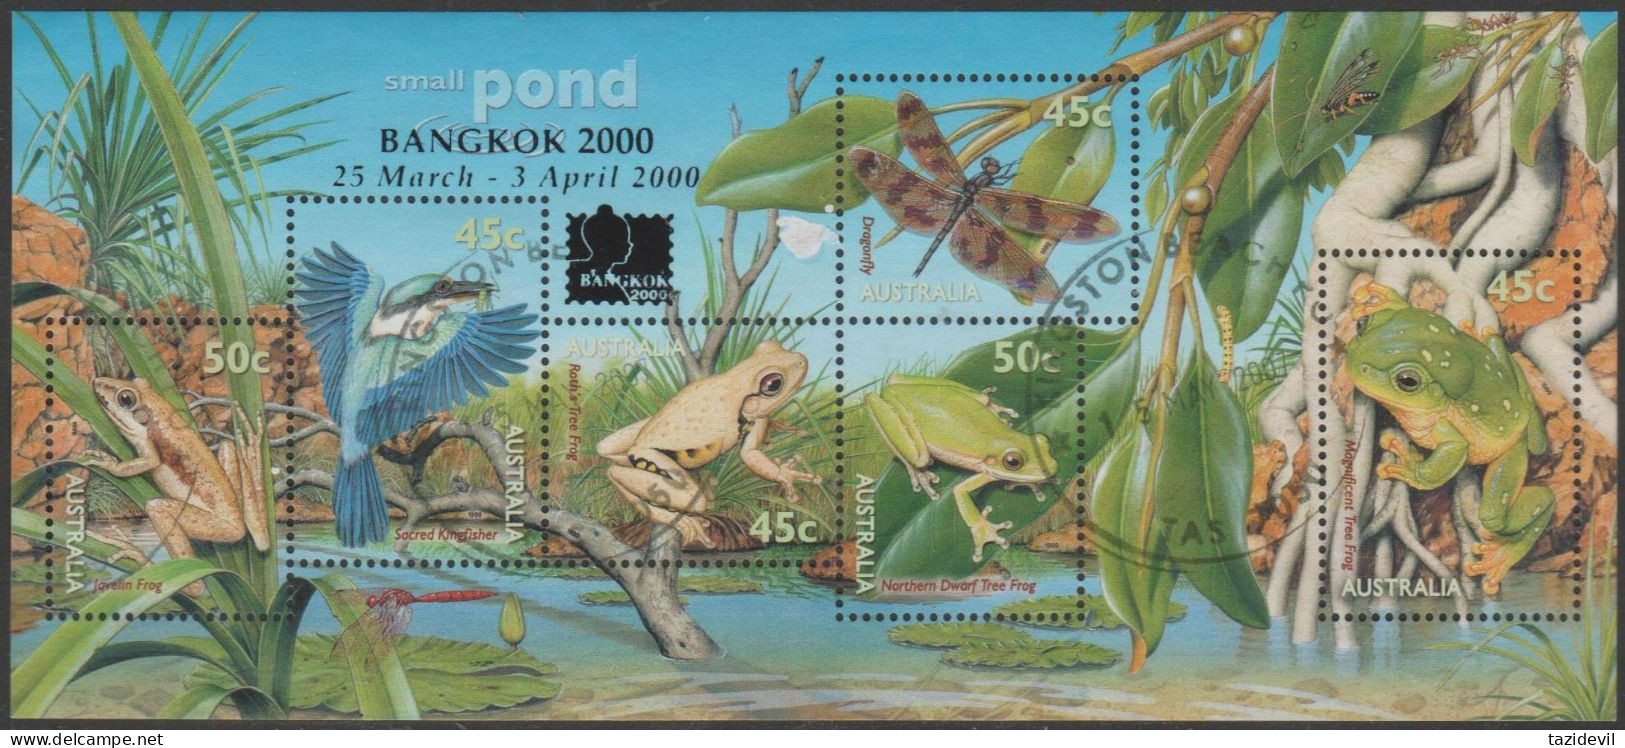 AUSTRALIA - USED - 1999 $2.80 Small Pond Souvenir Sheet Overprinted "Bangkok 2000" - Oblitérés